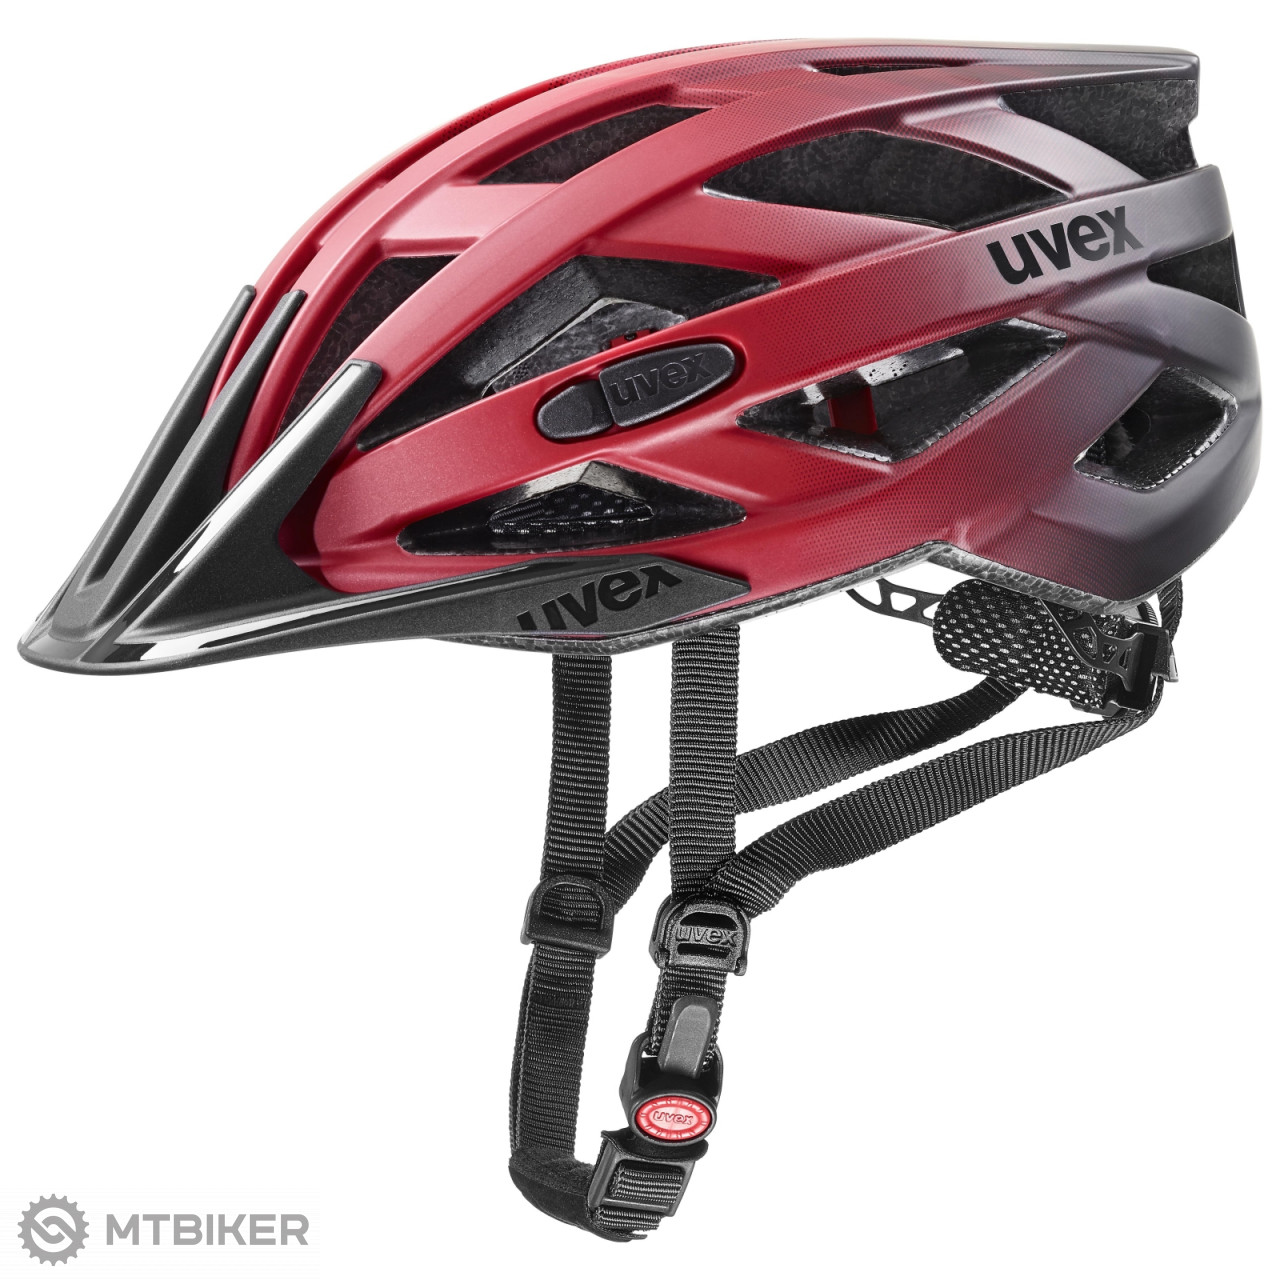 indruk vergaan kristal Uvex bicycle helmet i-vo cc red black mat - MTBIKER.shop